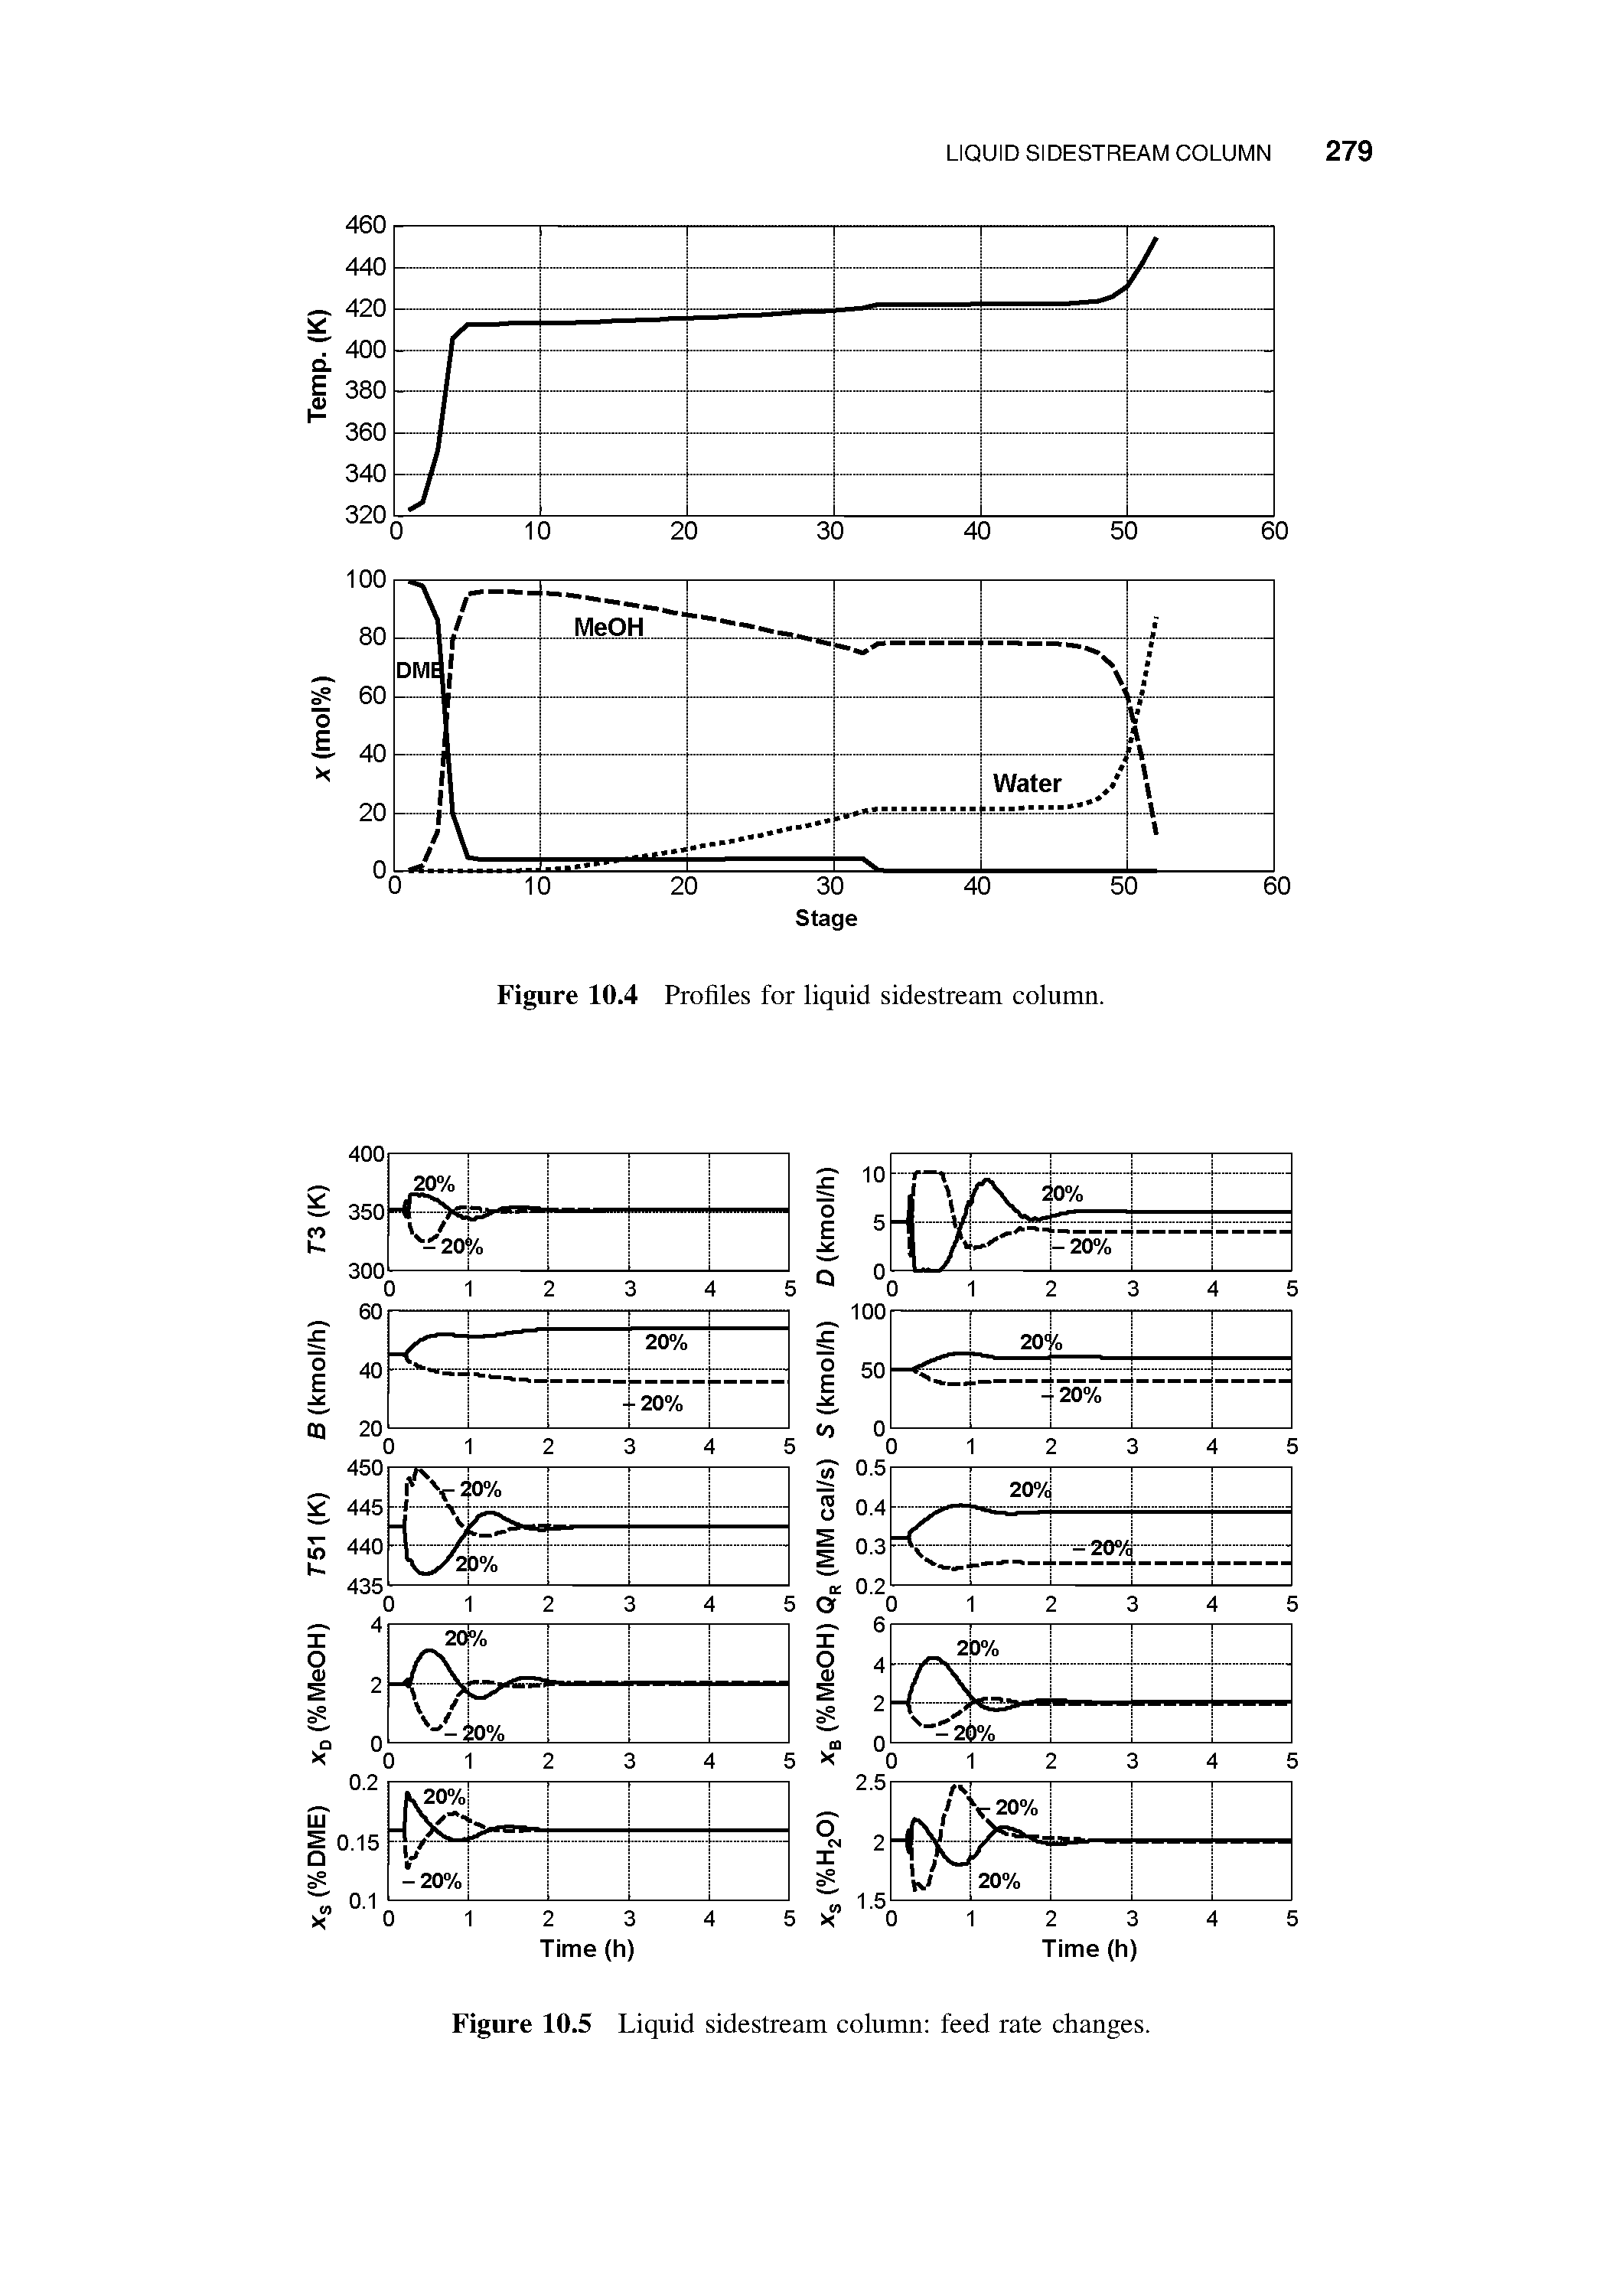 Figure 10.5 Liquid sidestream column feed rate changes.